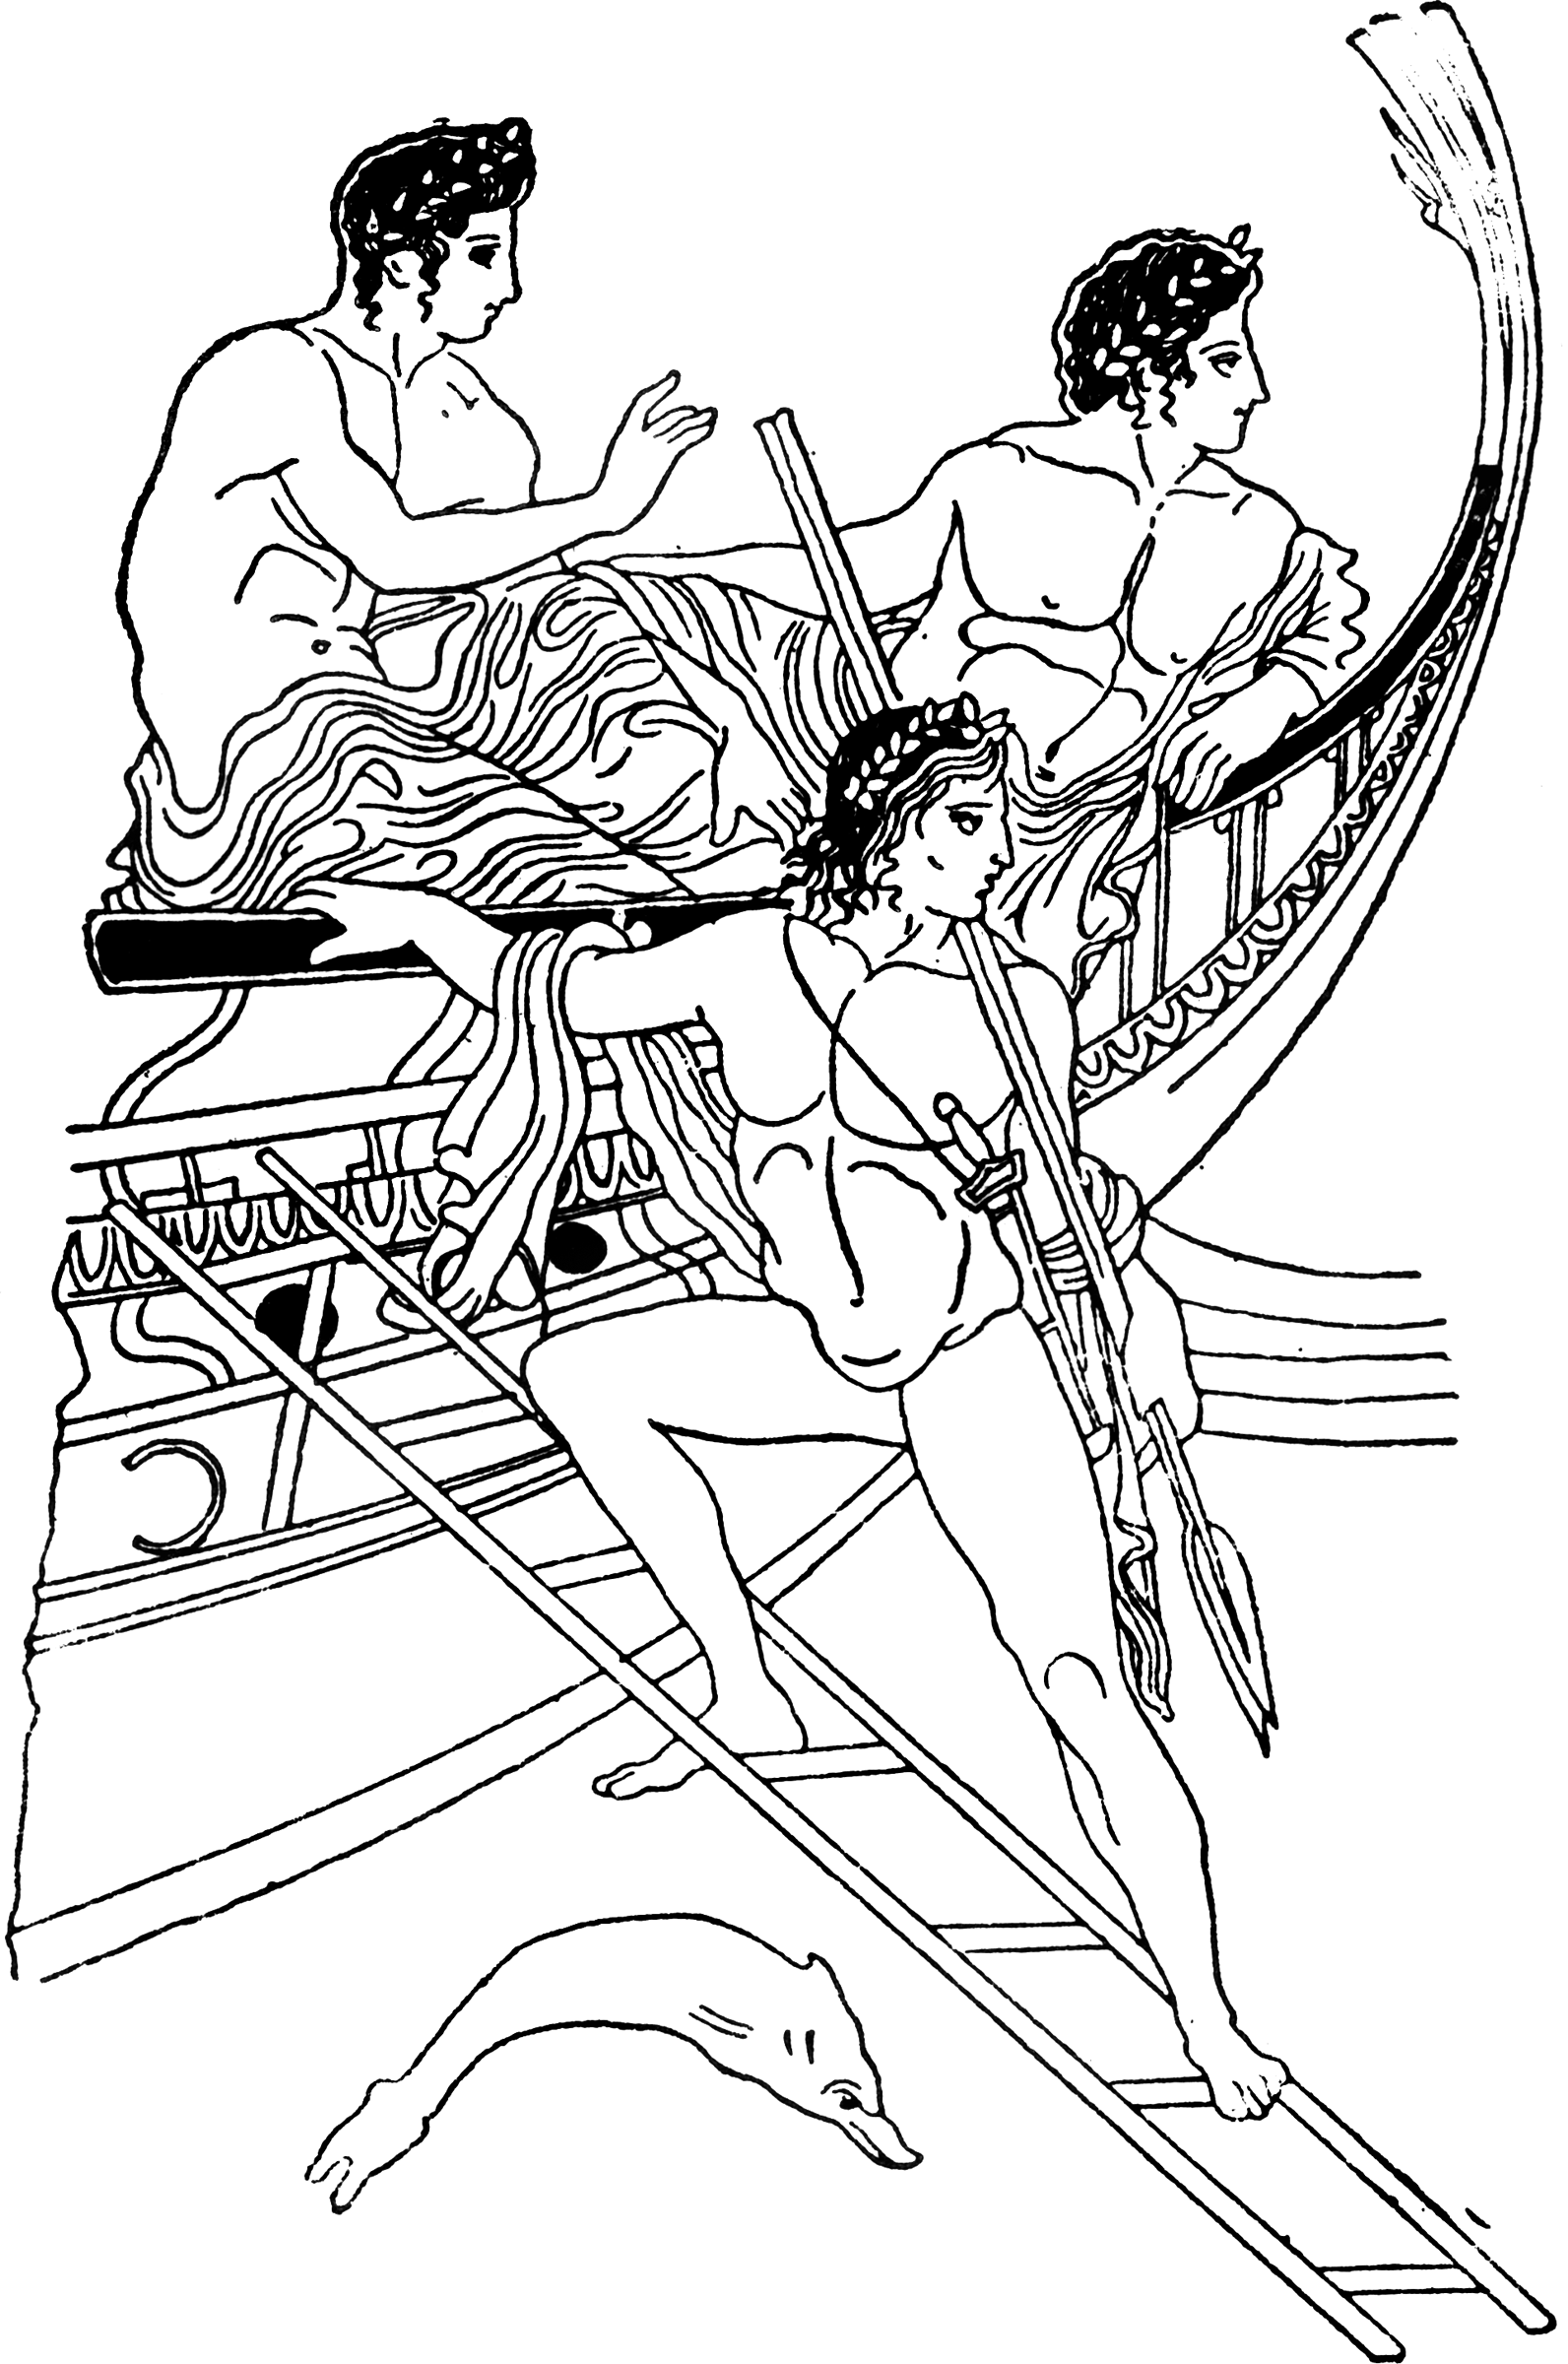 Легенда о арионе. Легенда об Арионе. Иллюстрация к легенде об Арионе. Рисунок на тему Легенда об Арионе. Иллюстрация Ариона на дельфине.